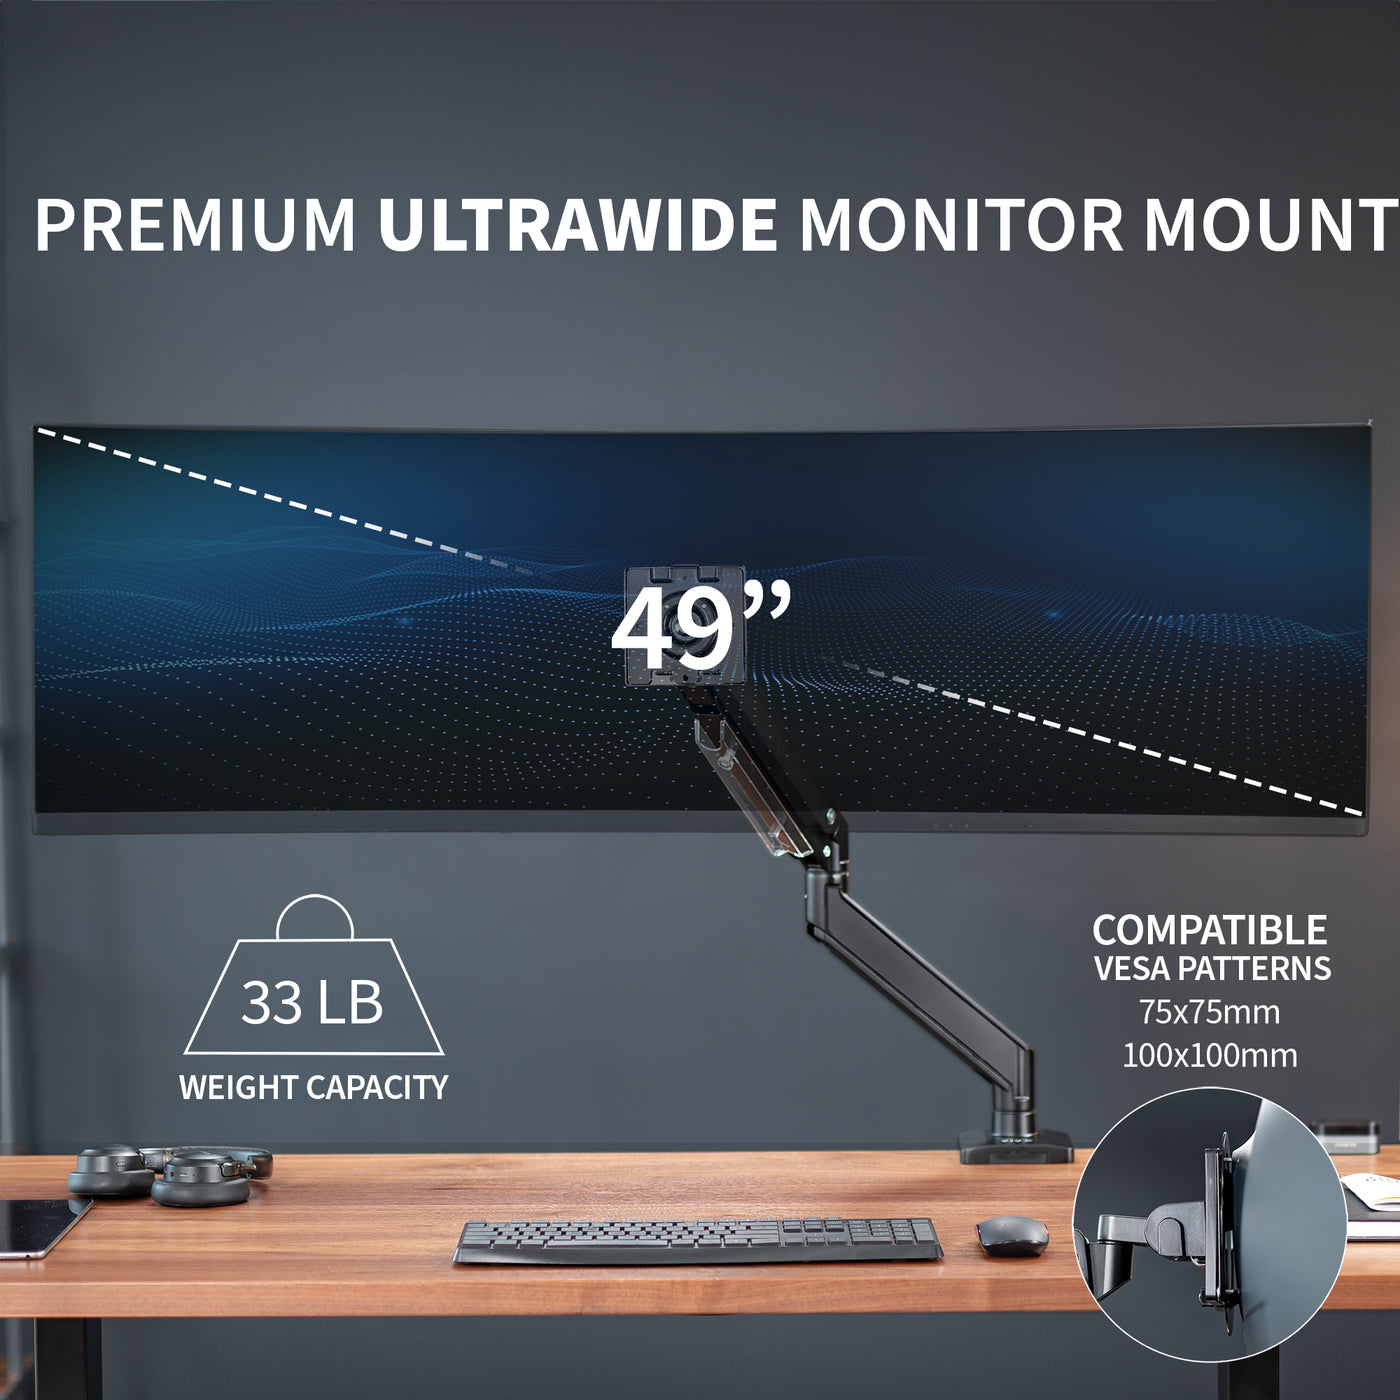 Sturdy adjustable pneumatic arm single ultrawide monitor ergonomic desk mount for office workstation